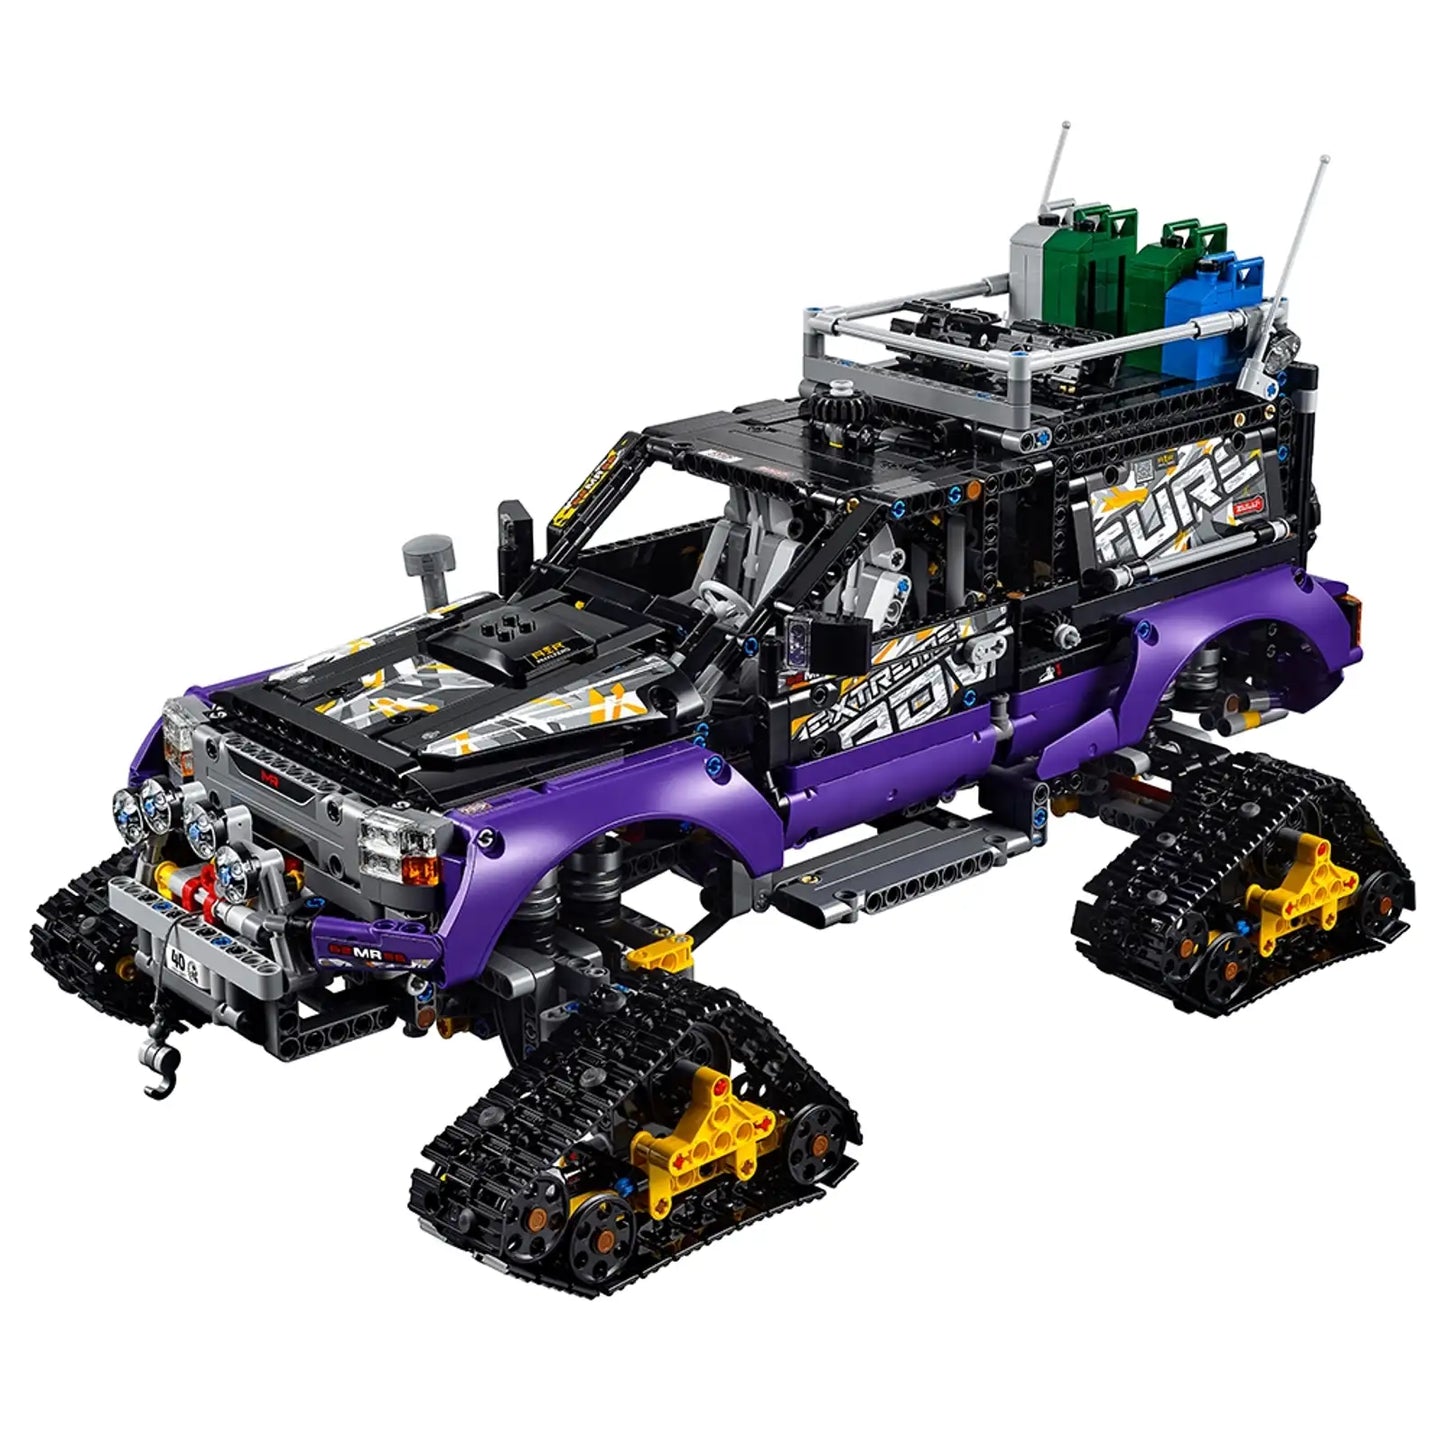 Extremgeländefahrzeug, LEGO 42069